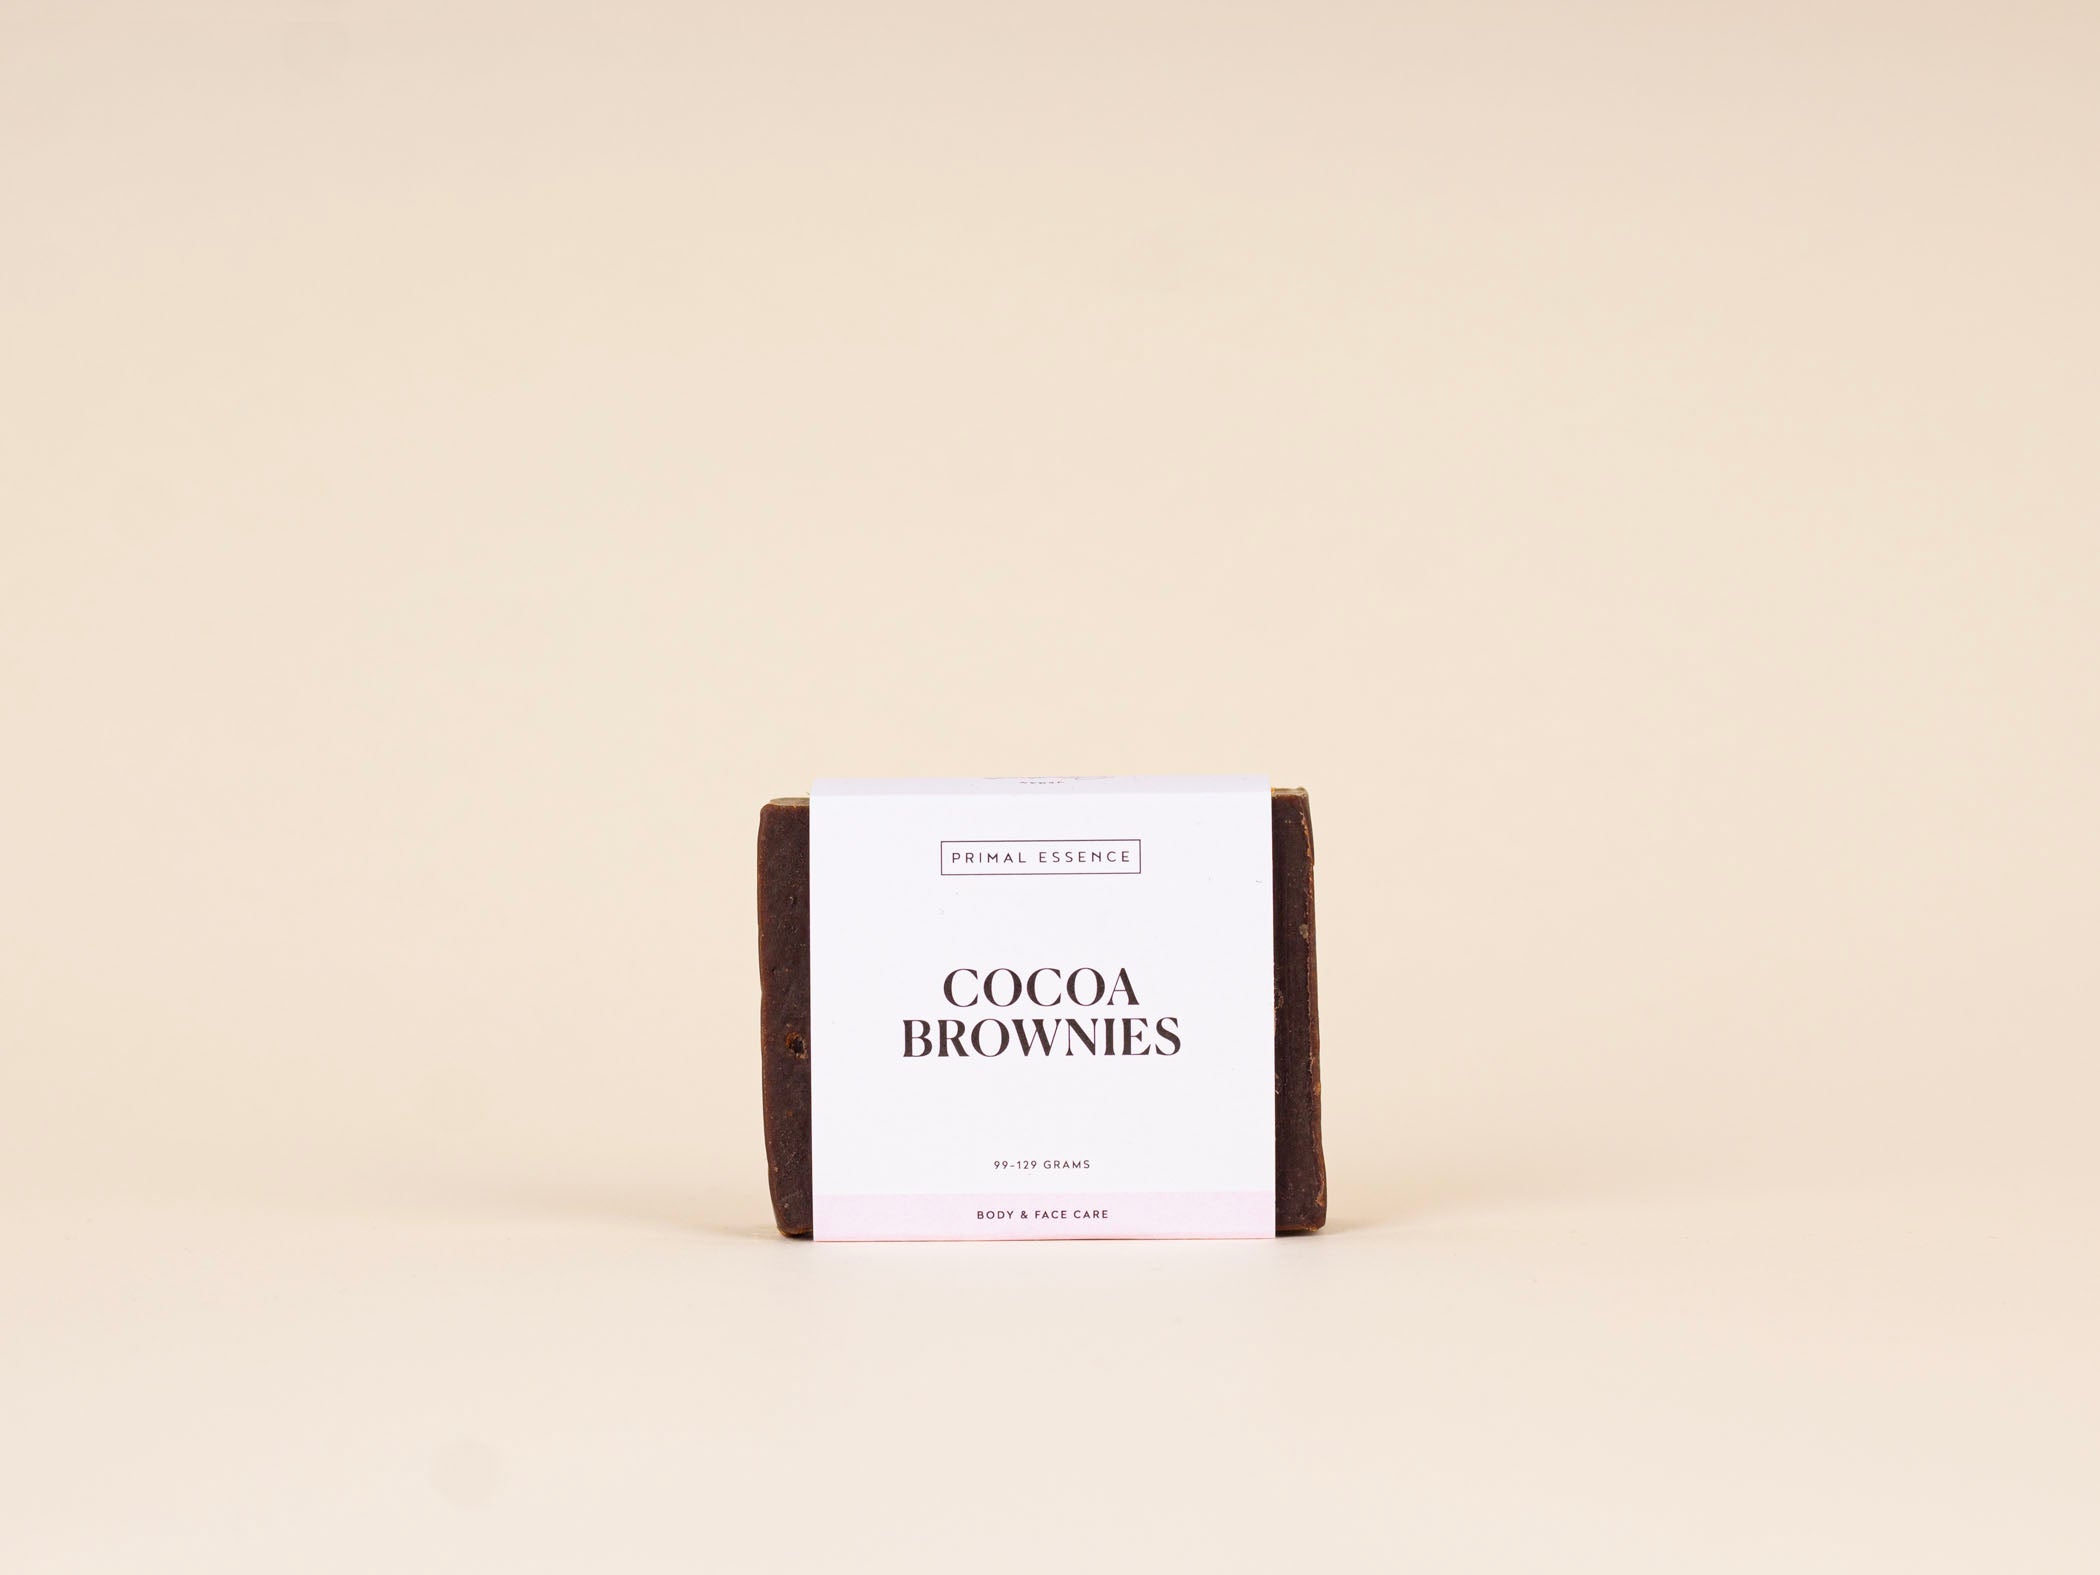 Cocoa Brownies Primal Essence